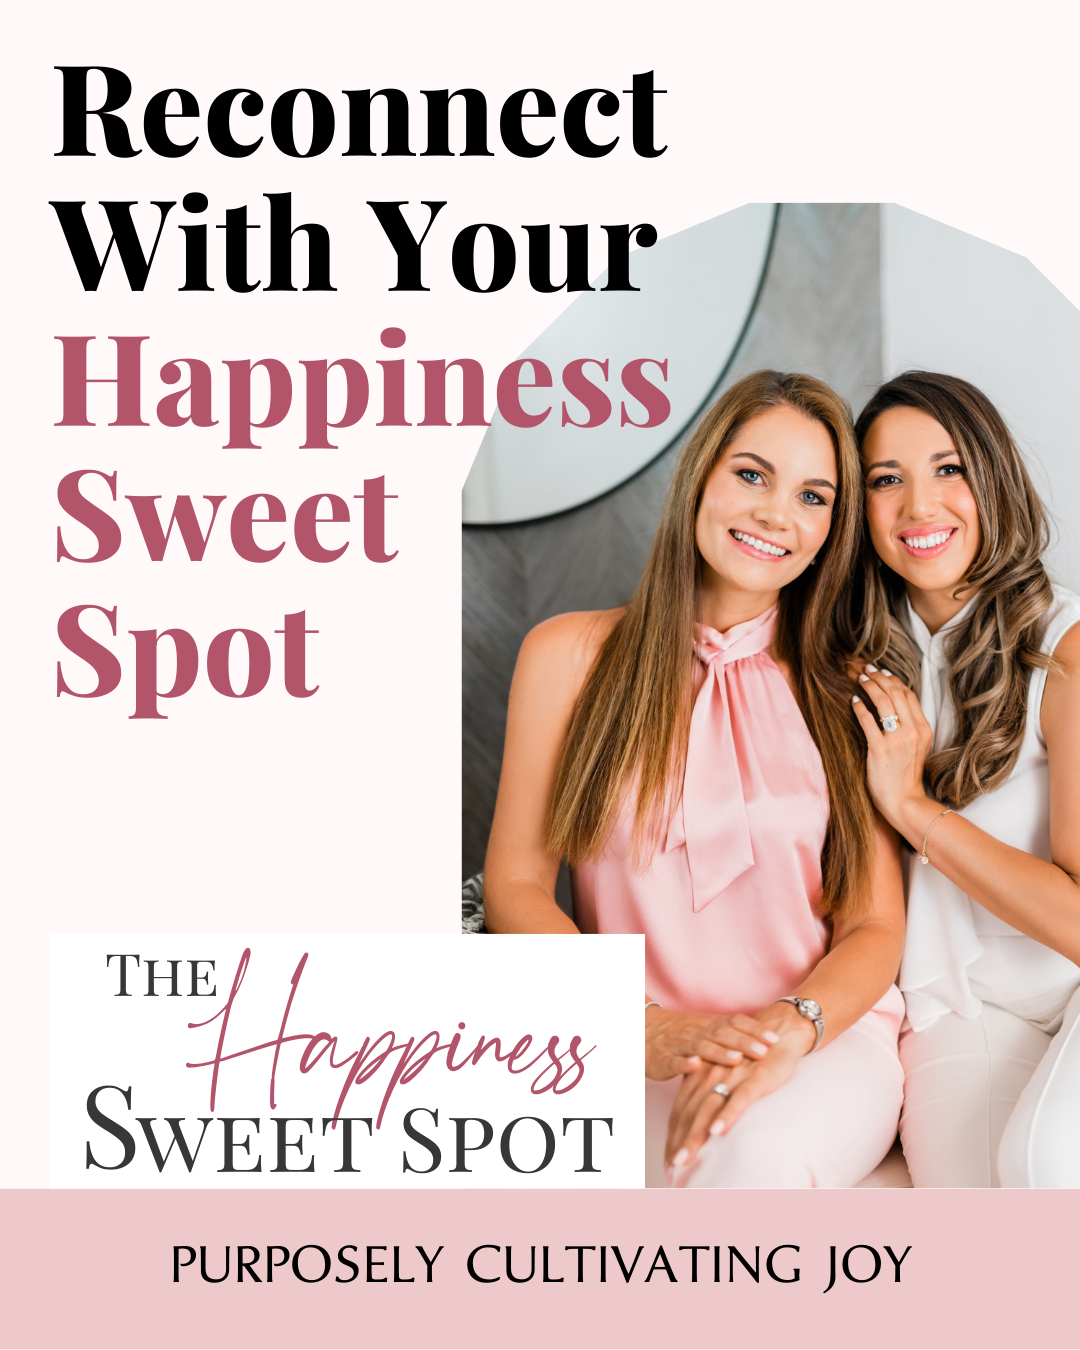 Laura Brunereau & Nadia Yazdani The Happiness Sweet Spot Podcast